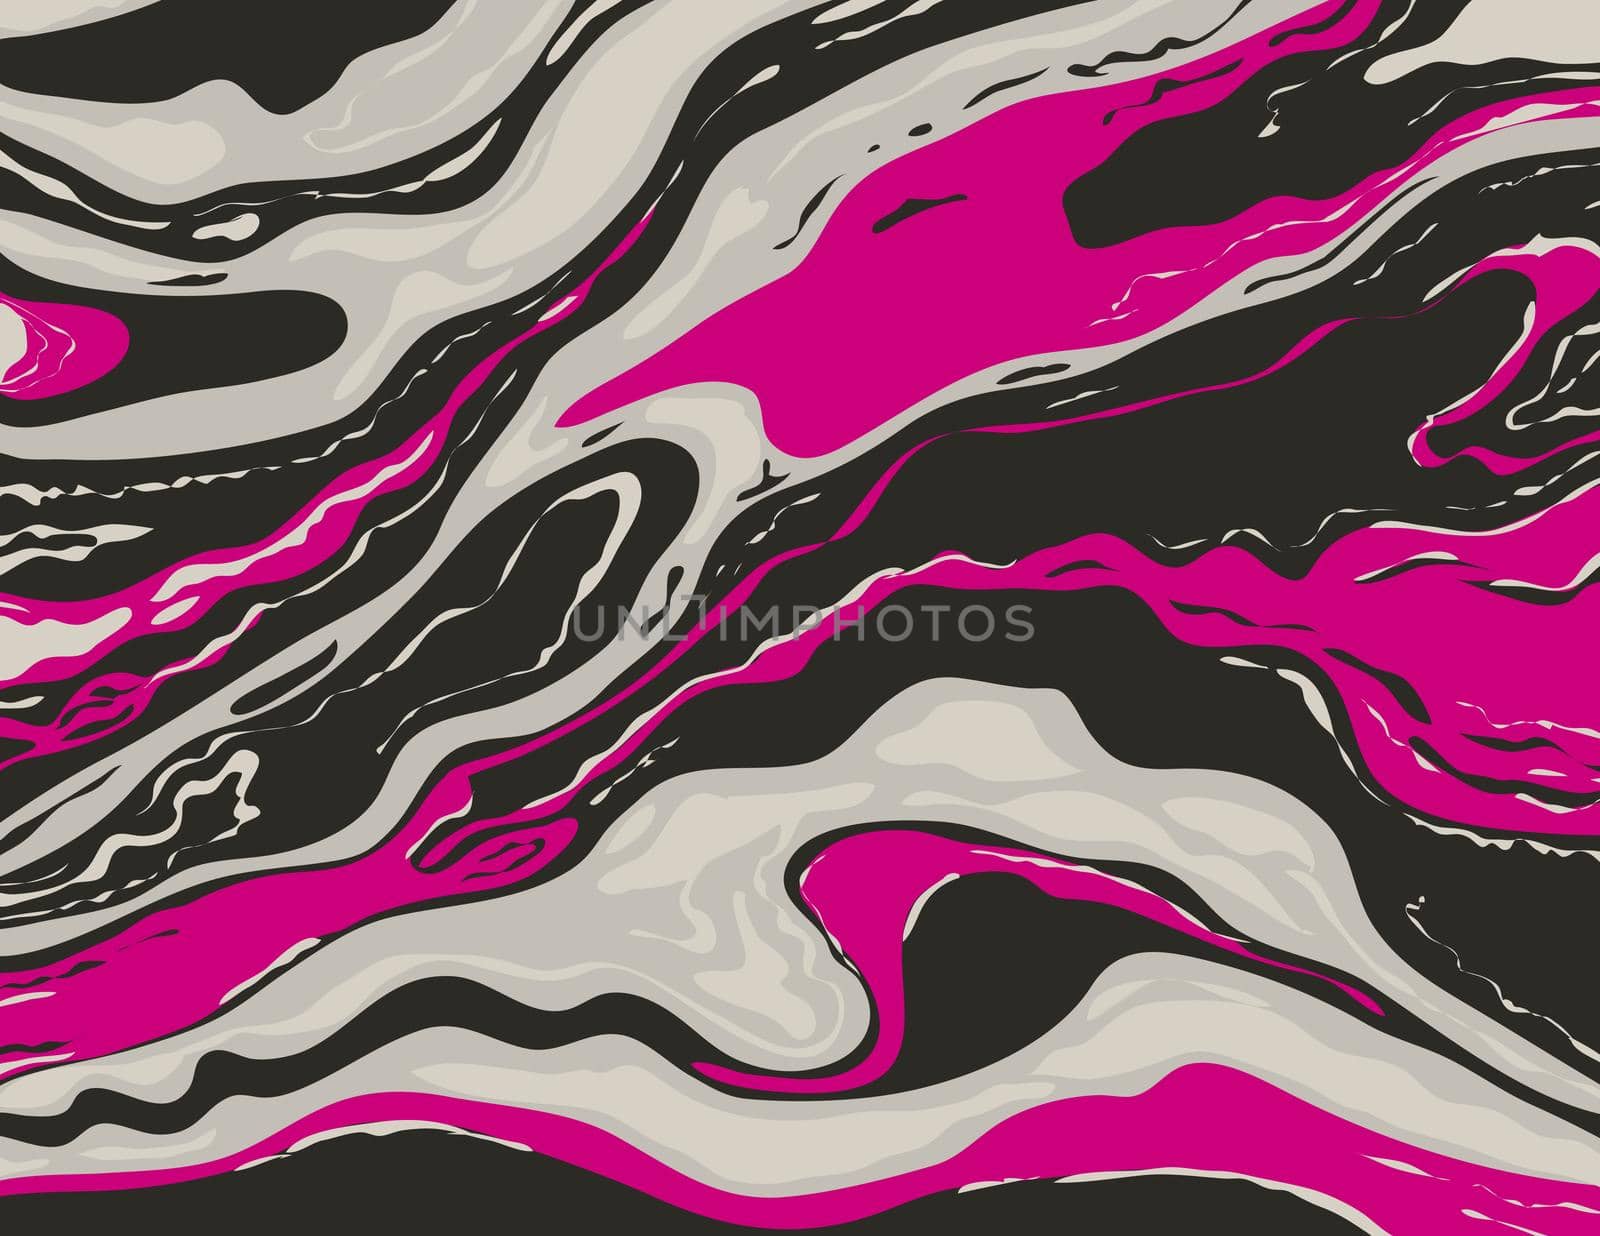 Black and White Brink Pink Inkscape Suminagashi Kintsugi Japanese Ink Marbling Paper Abstract Art by patrimonio